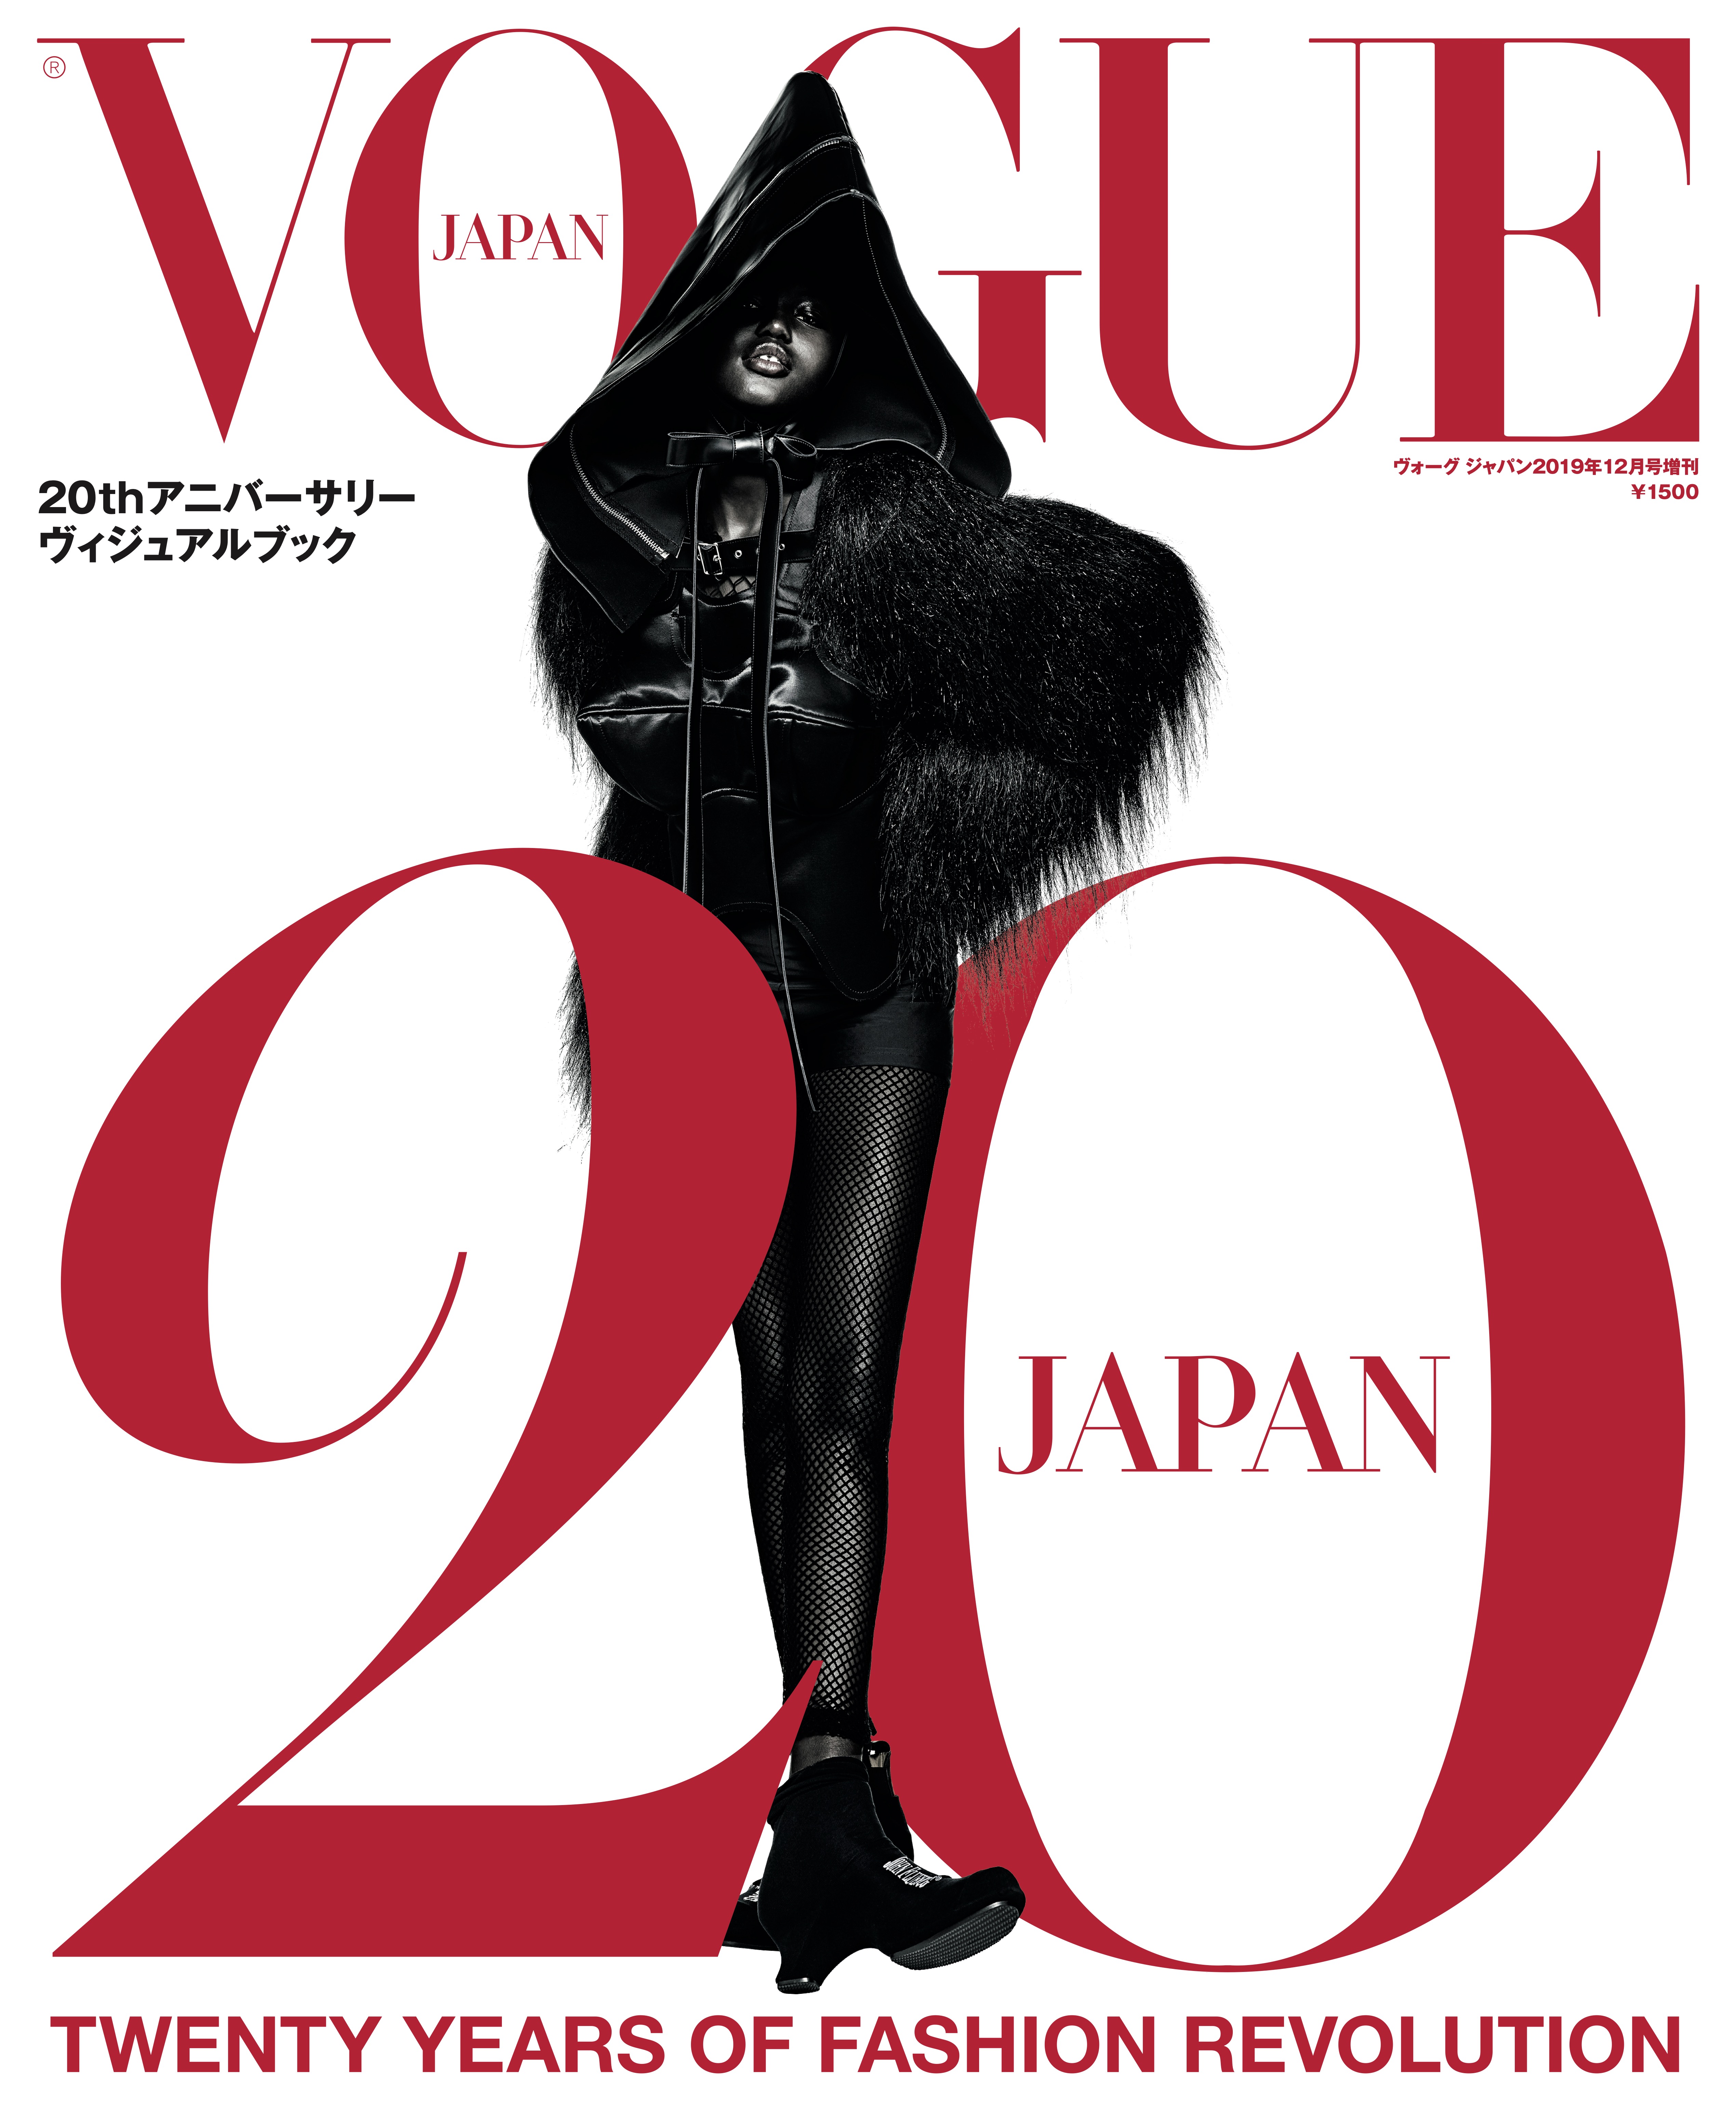 Vogue Japan のファッション写真を再編集したth アニバーサリー ヴィジュアル ブック 本日発売 その他 創刊周年記念コンテンツが続々登場 コンデナスト ジャパンのプレスリリース